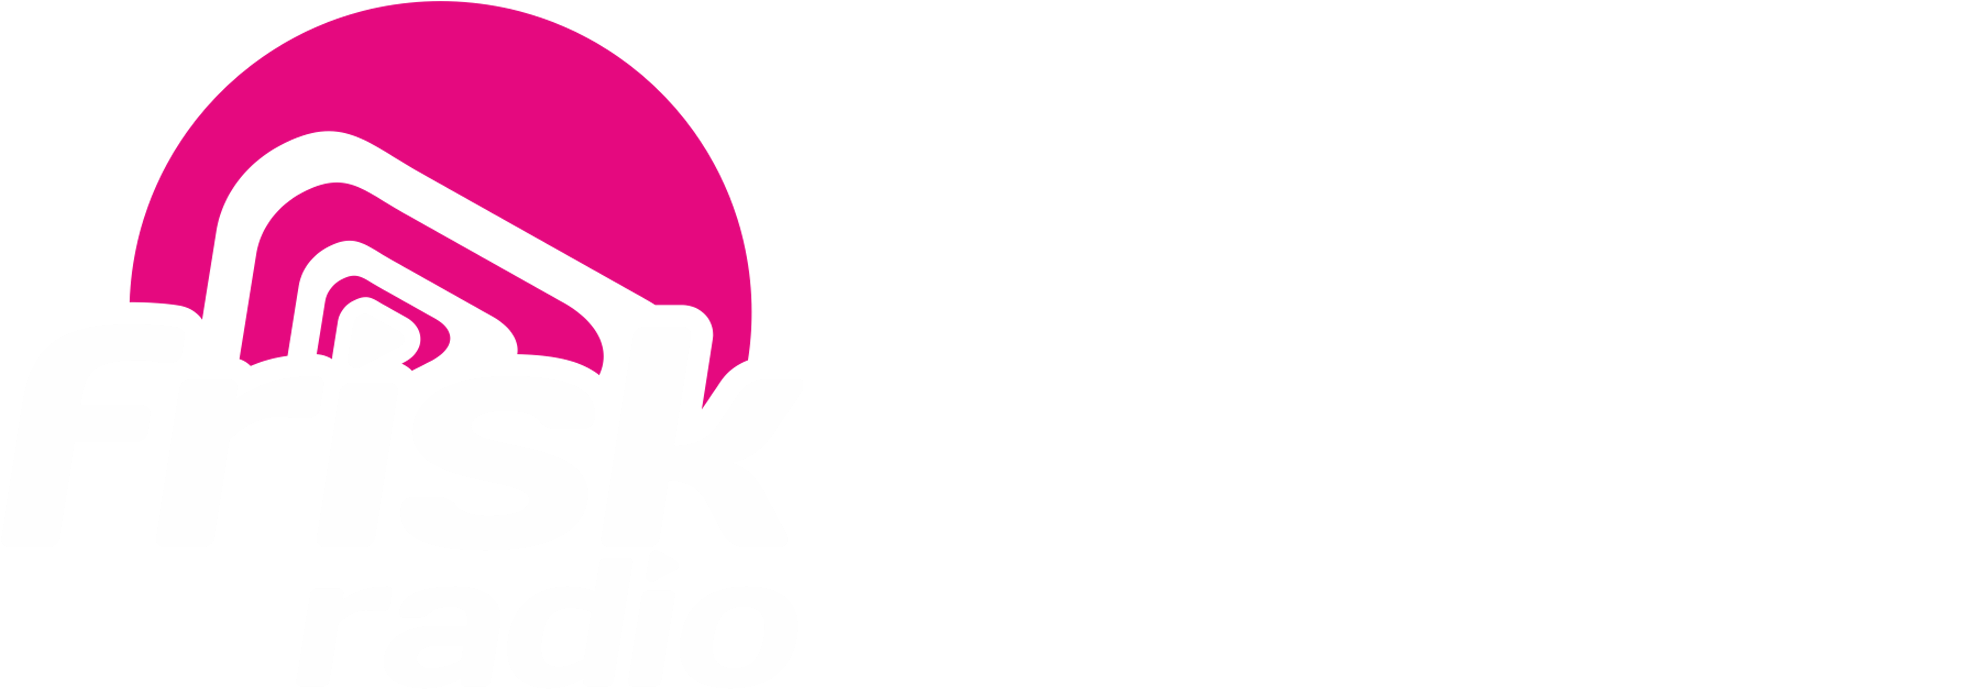 Non-stop Dance Hits - Non-stop Dance Hits (2000x712)